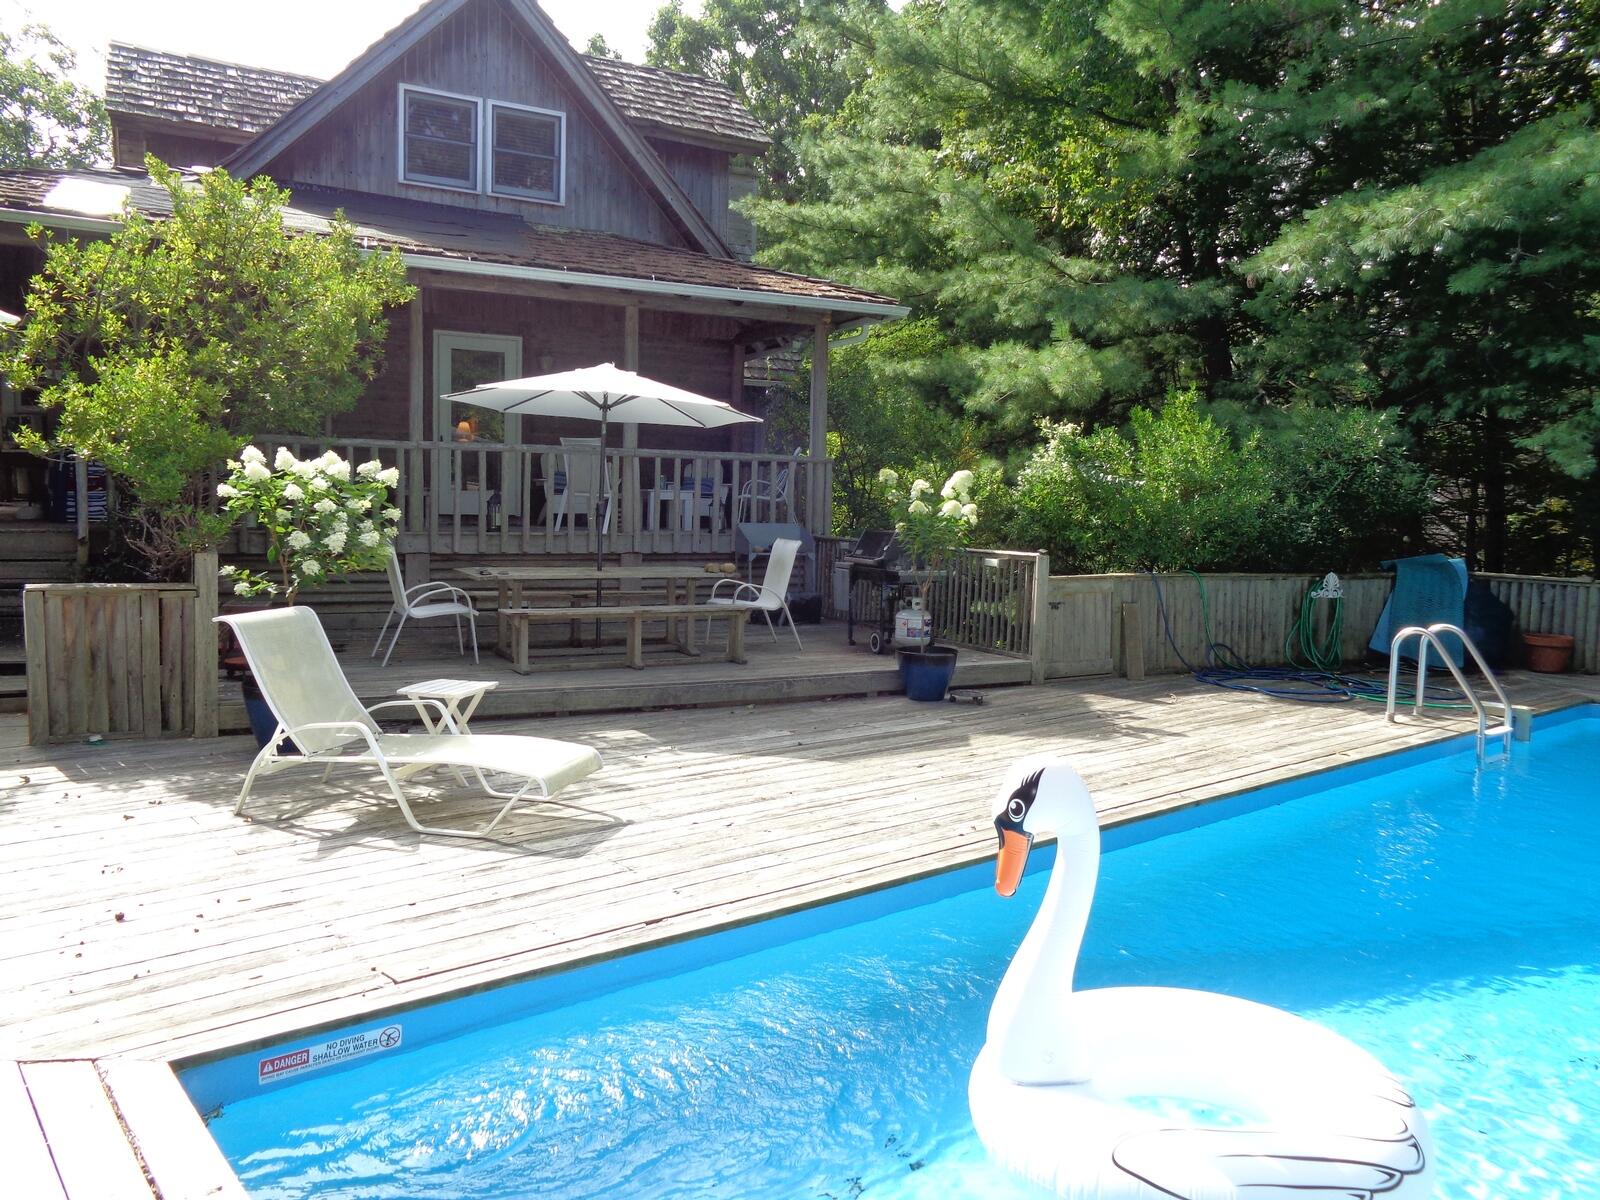 Rental Property at Springs, Springs, Hamptons, NY - Bedrooms: 3 
Bathrooms: 2.5  - $3,800 MO.